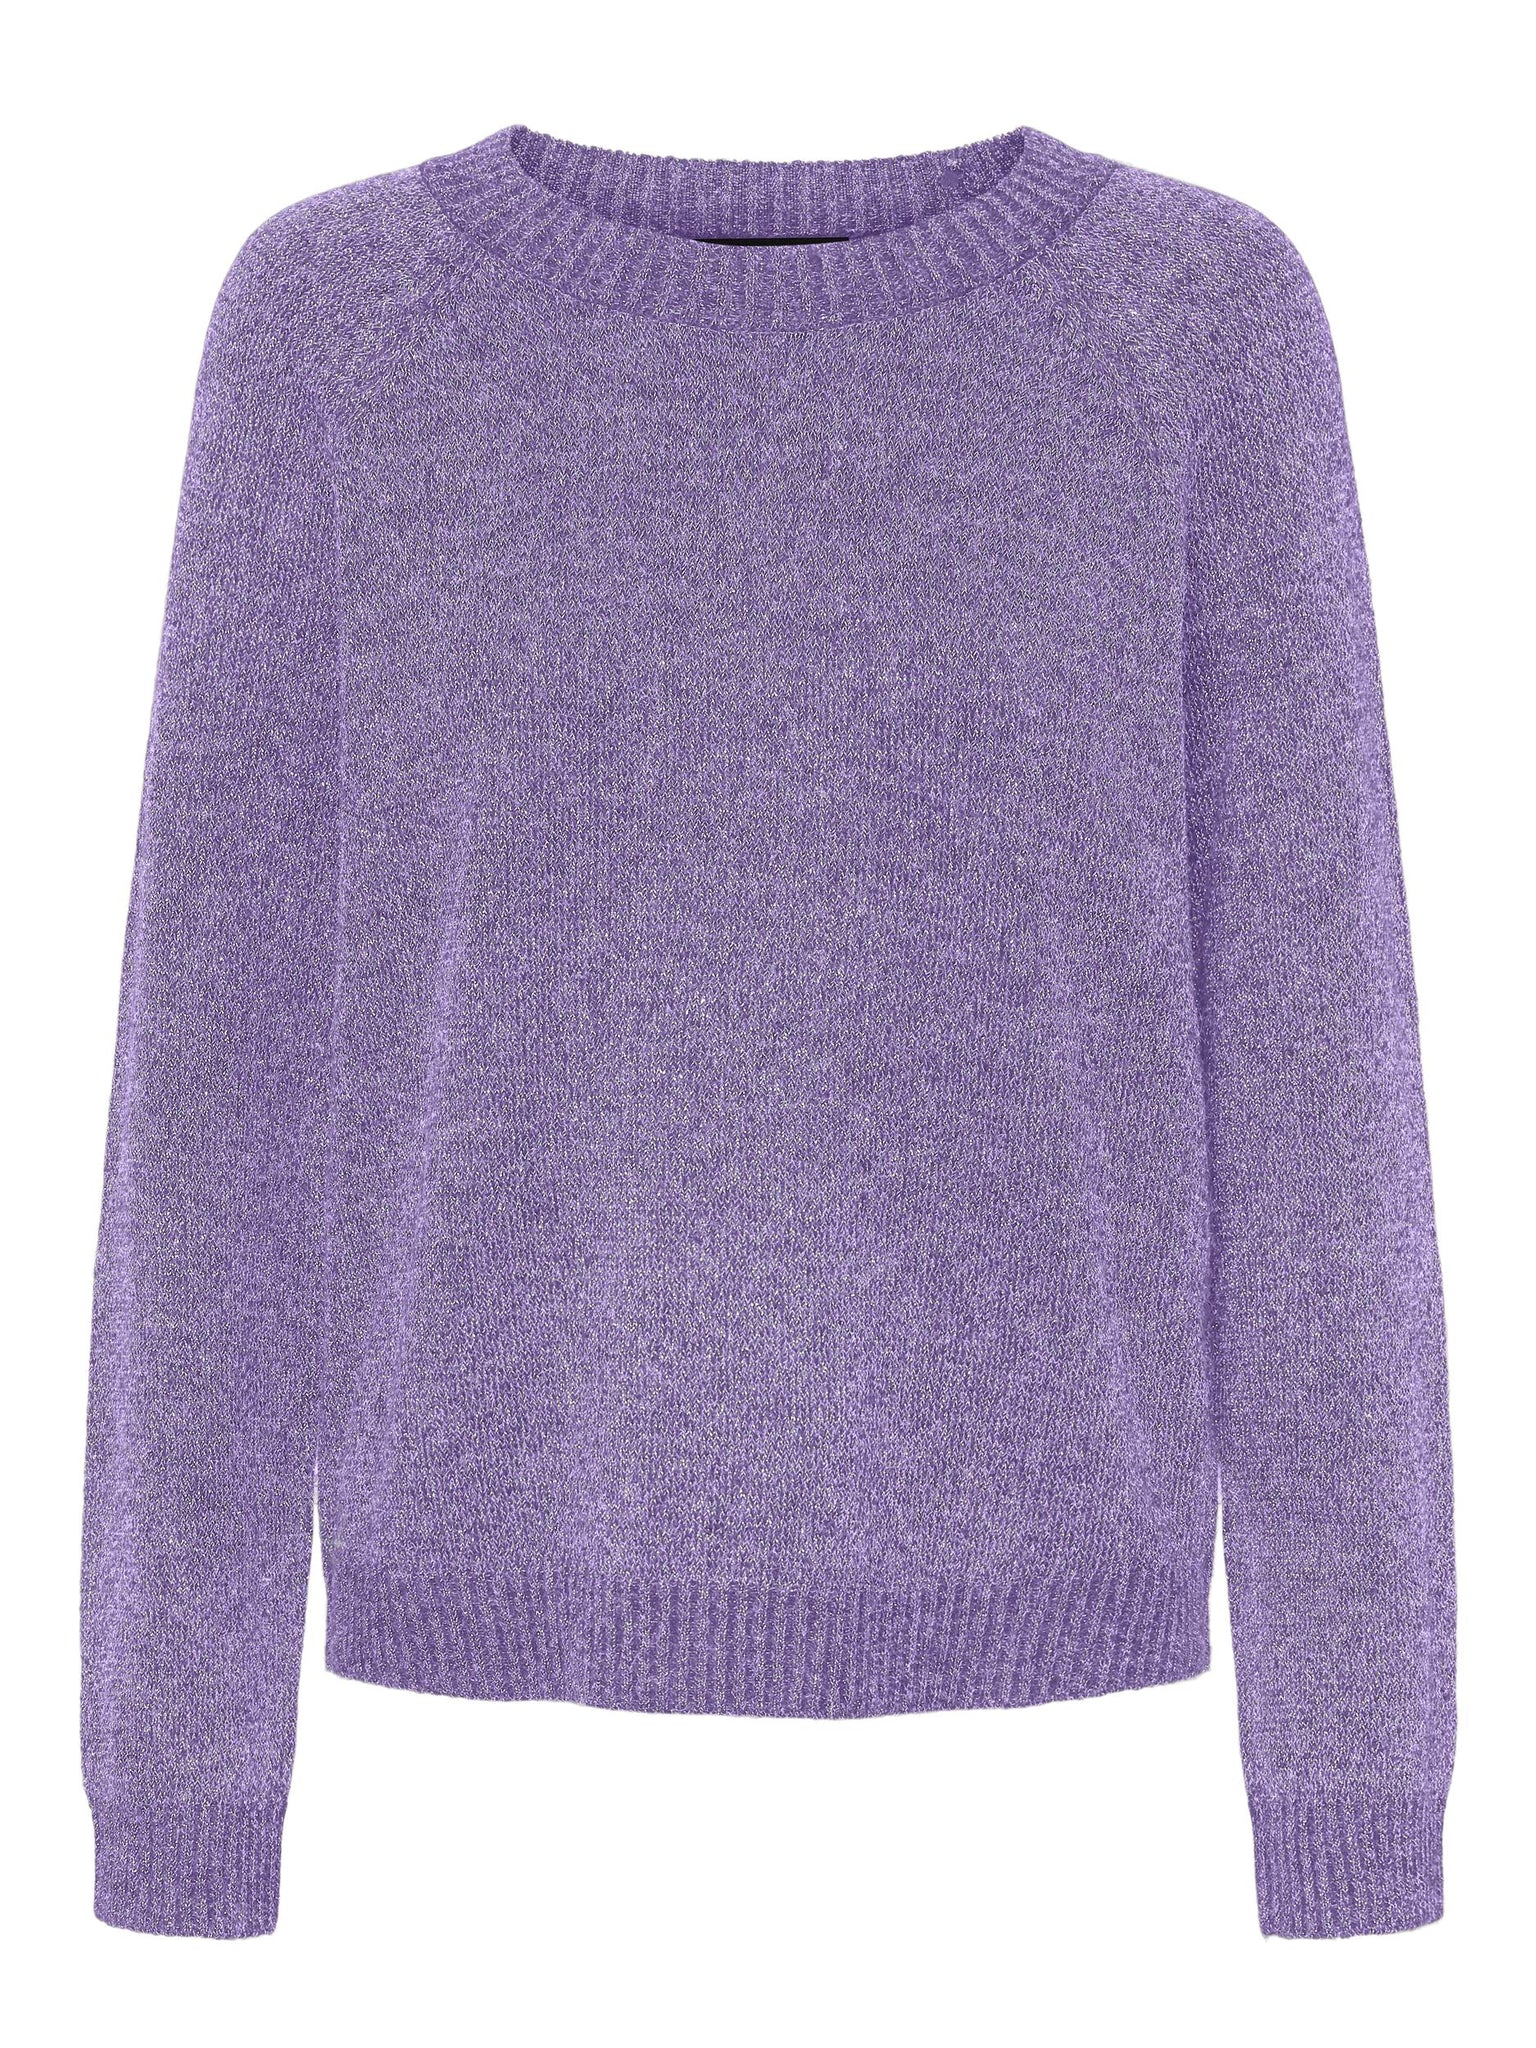 Vero Moda Lurex O-Neck Pullover in Lilac